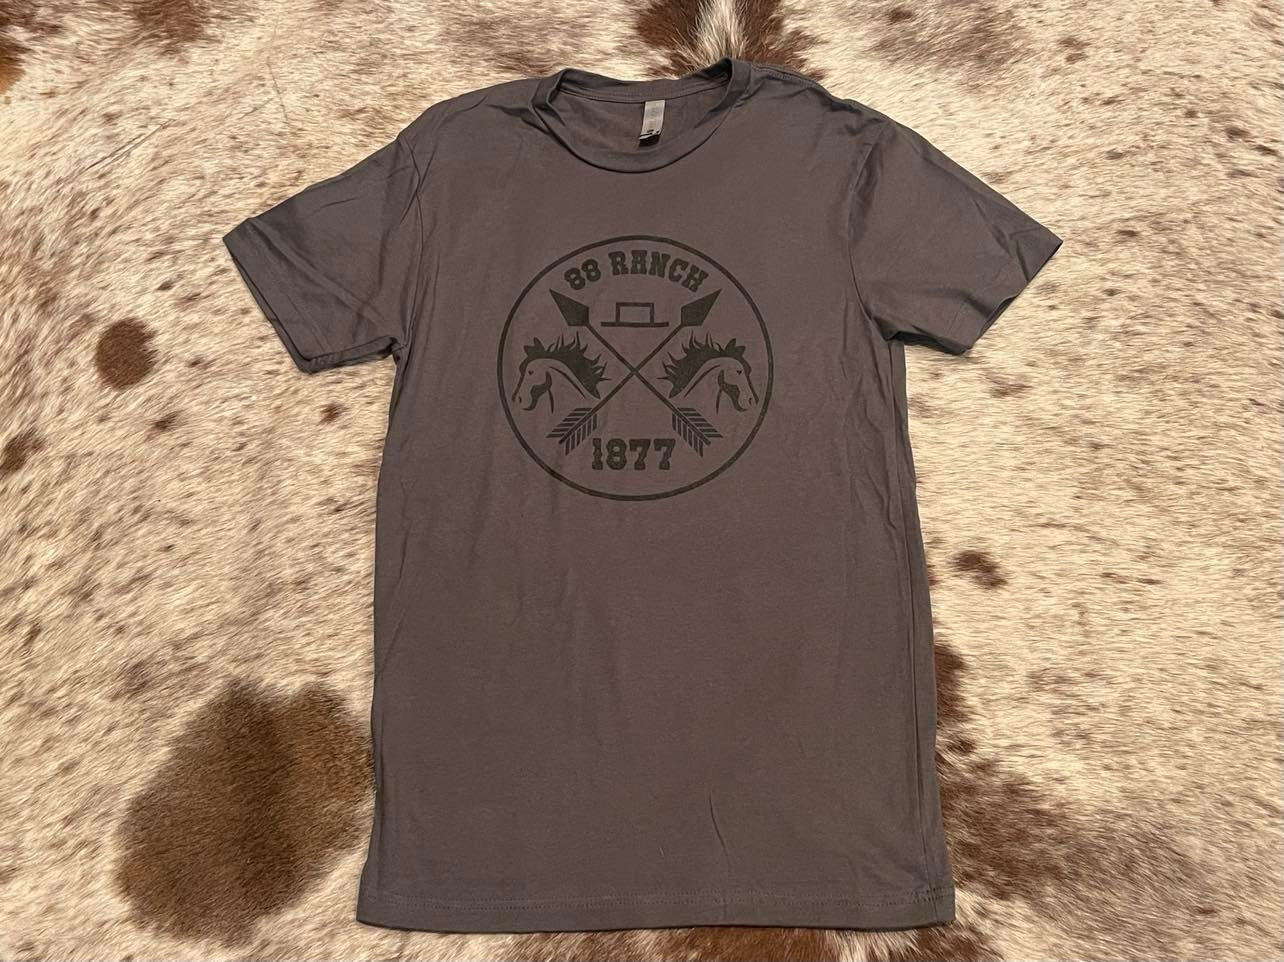 88 Ranch 1877 T-Shirt